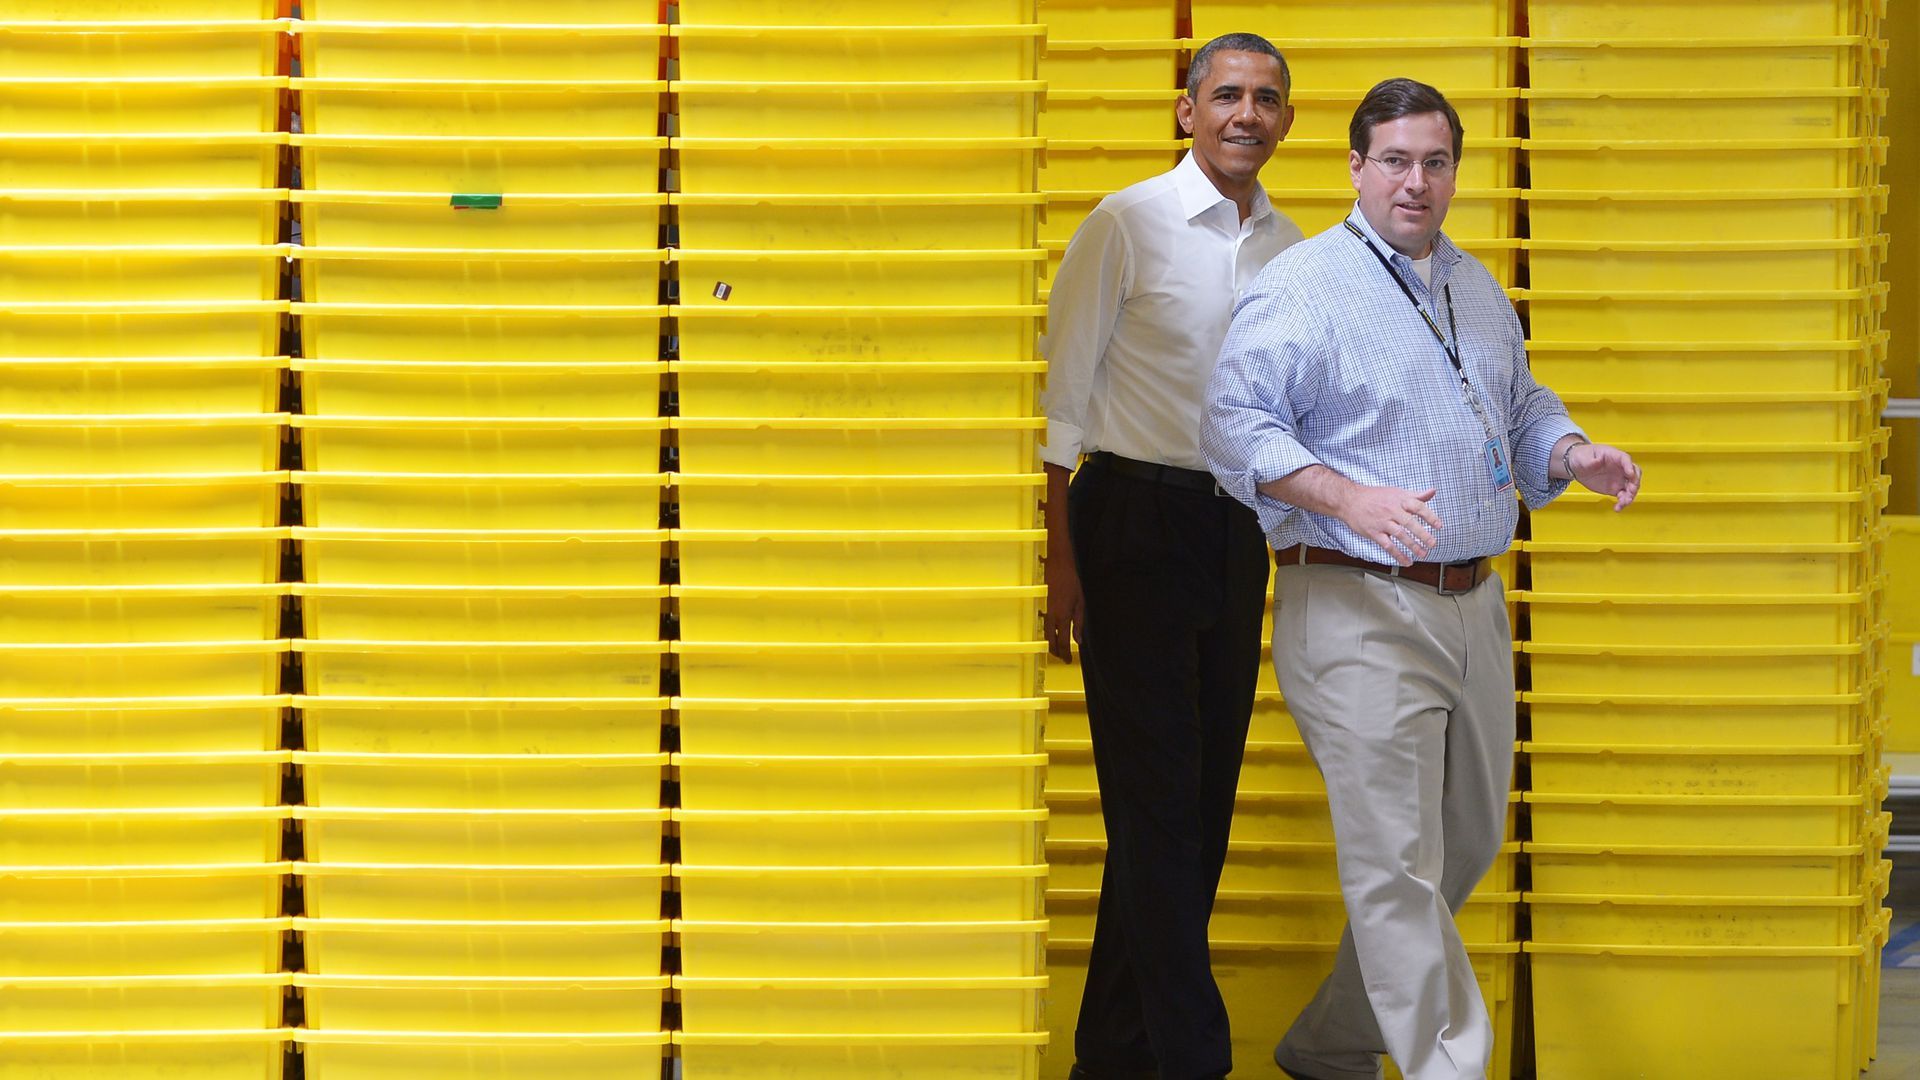 Then-President Barack Obama with Amazon executive Dave Clark amid yellow bins